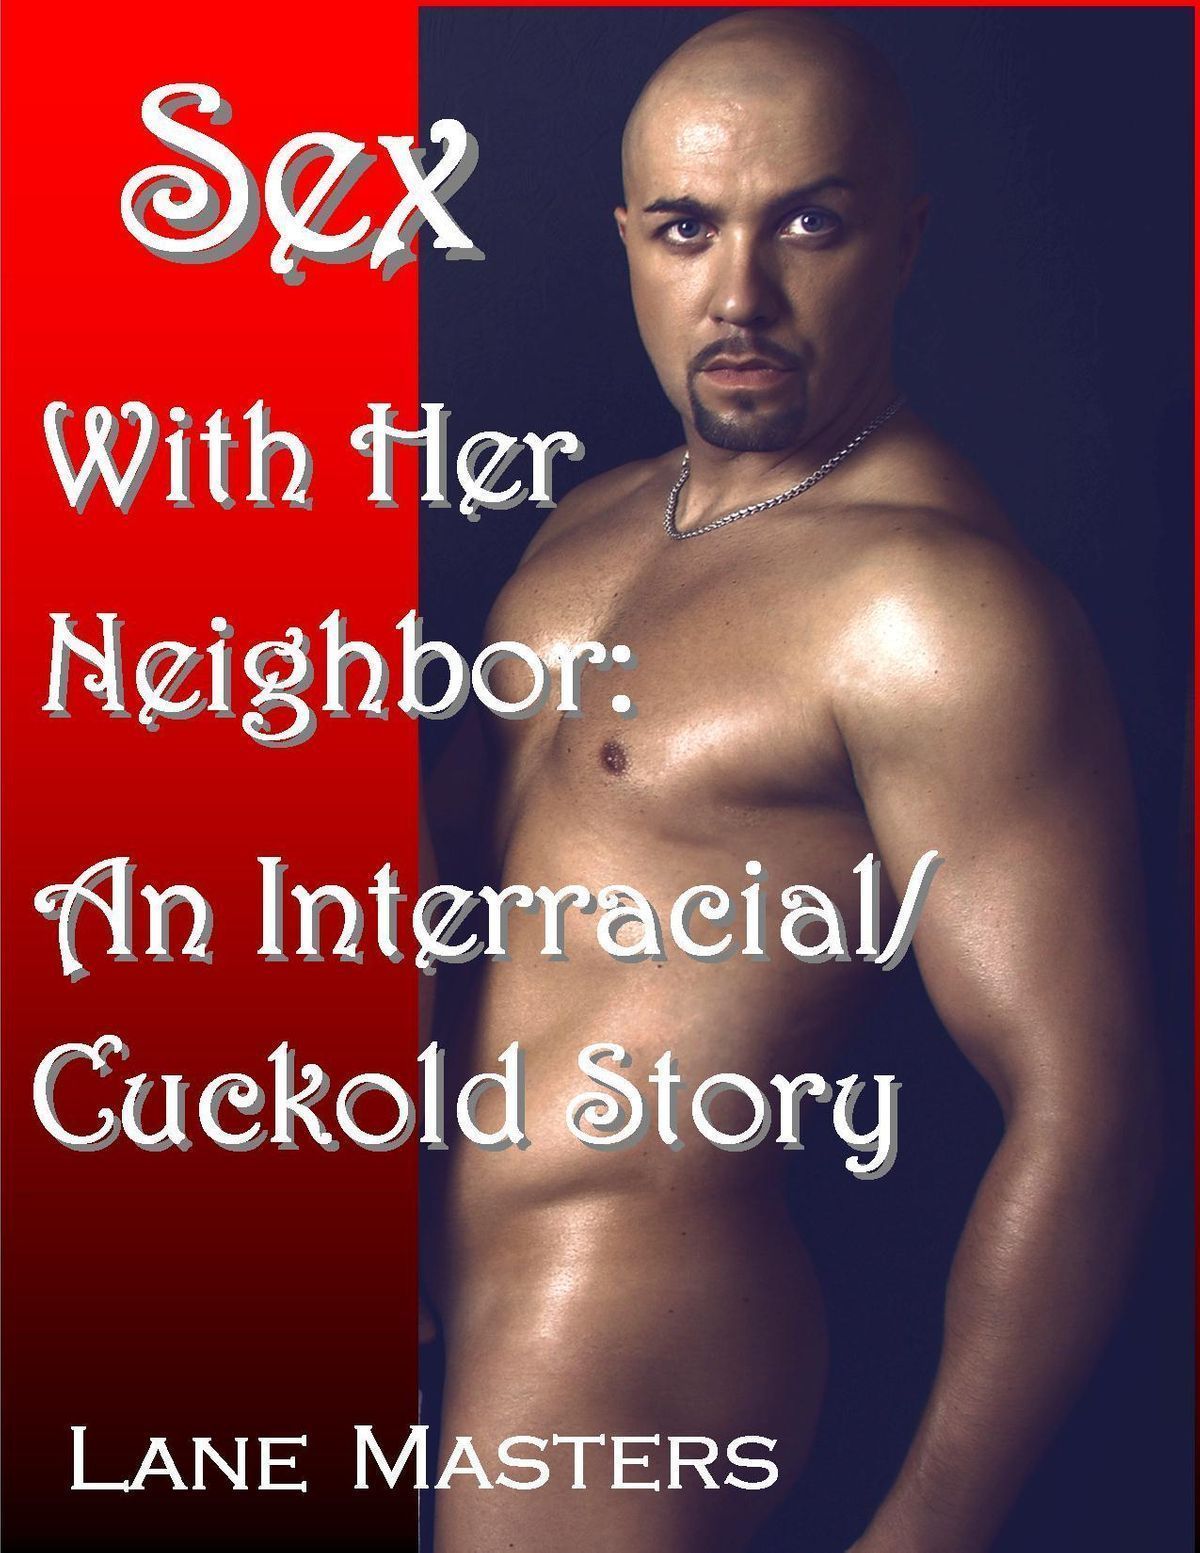 Taboo interracial sex stories 